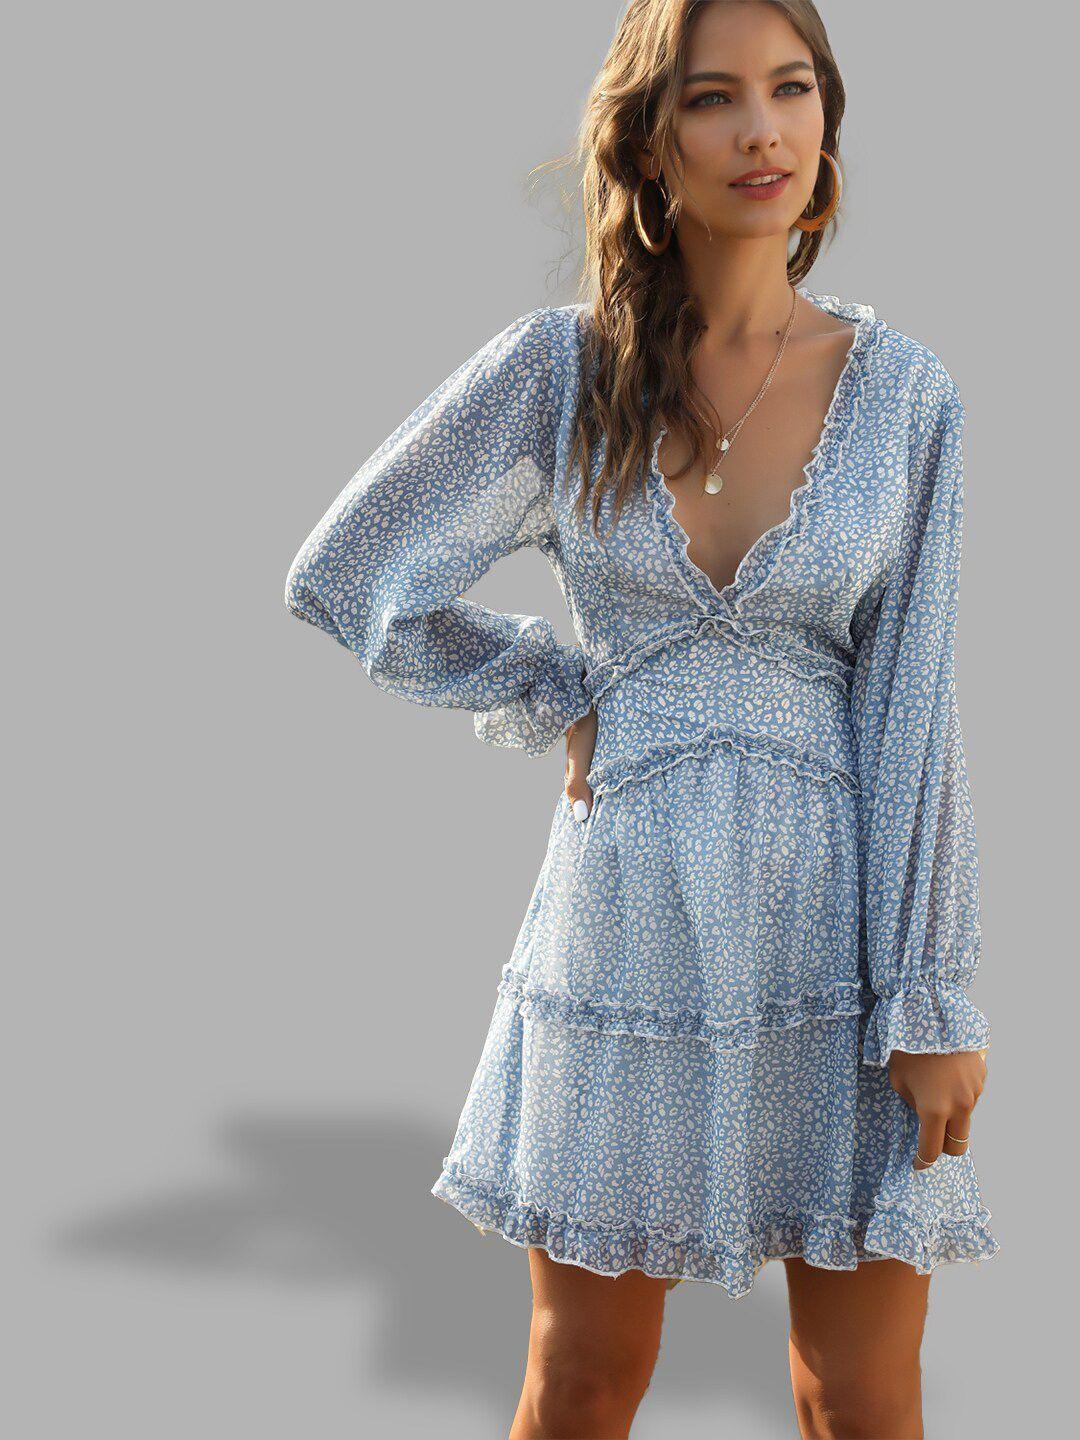 jc collection blue & white dress